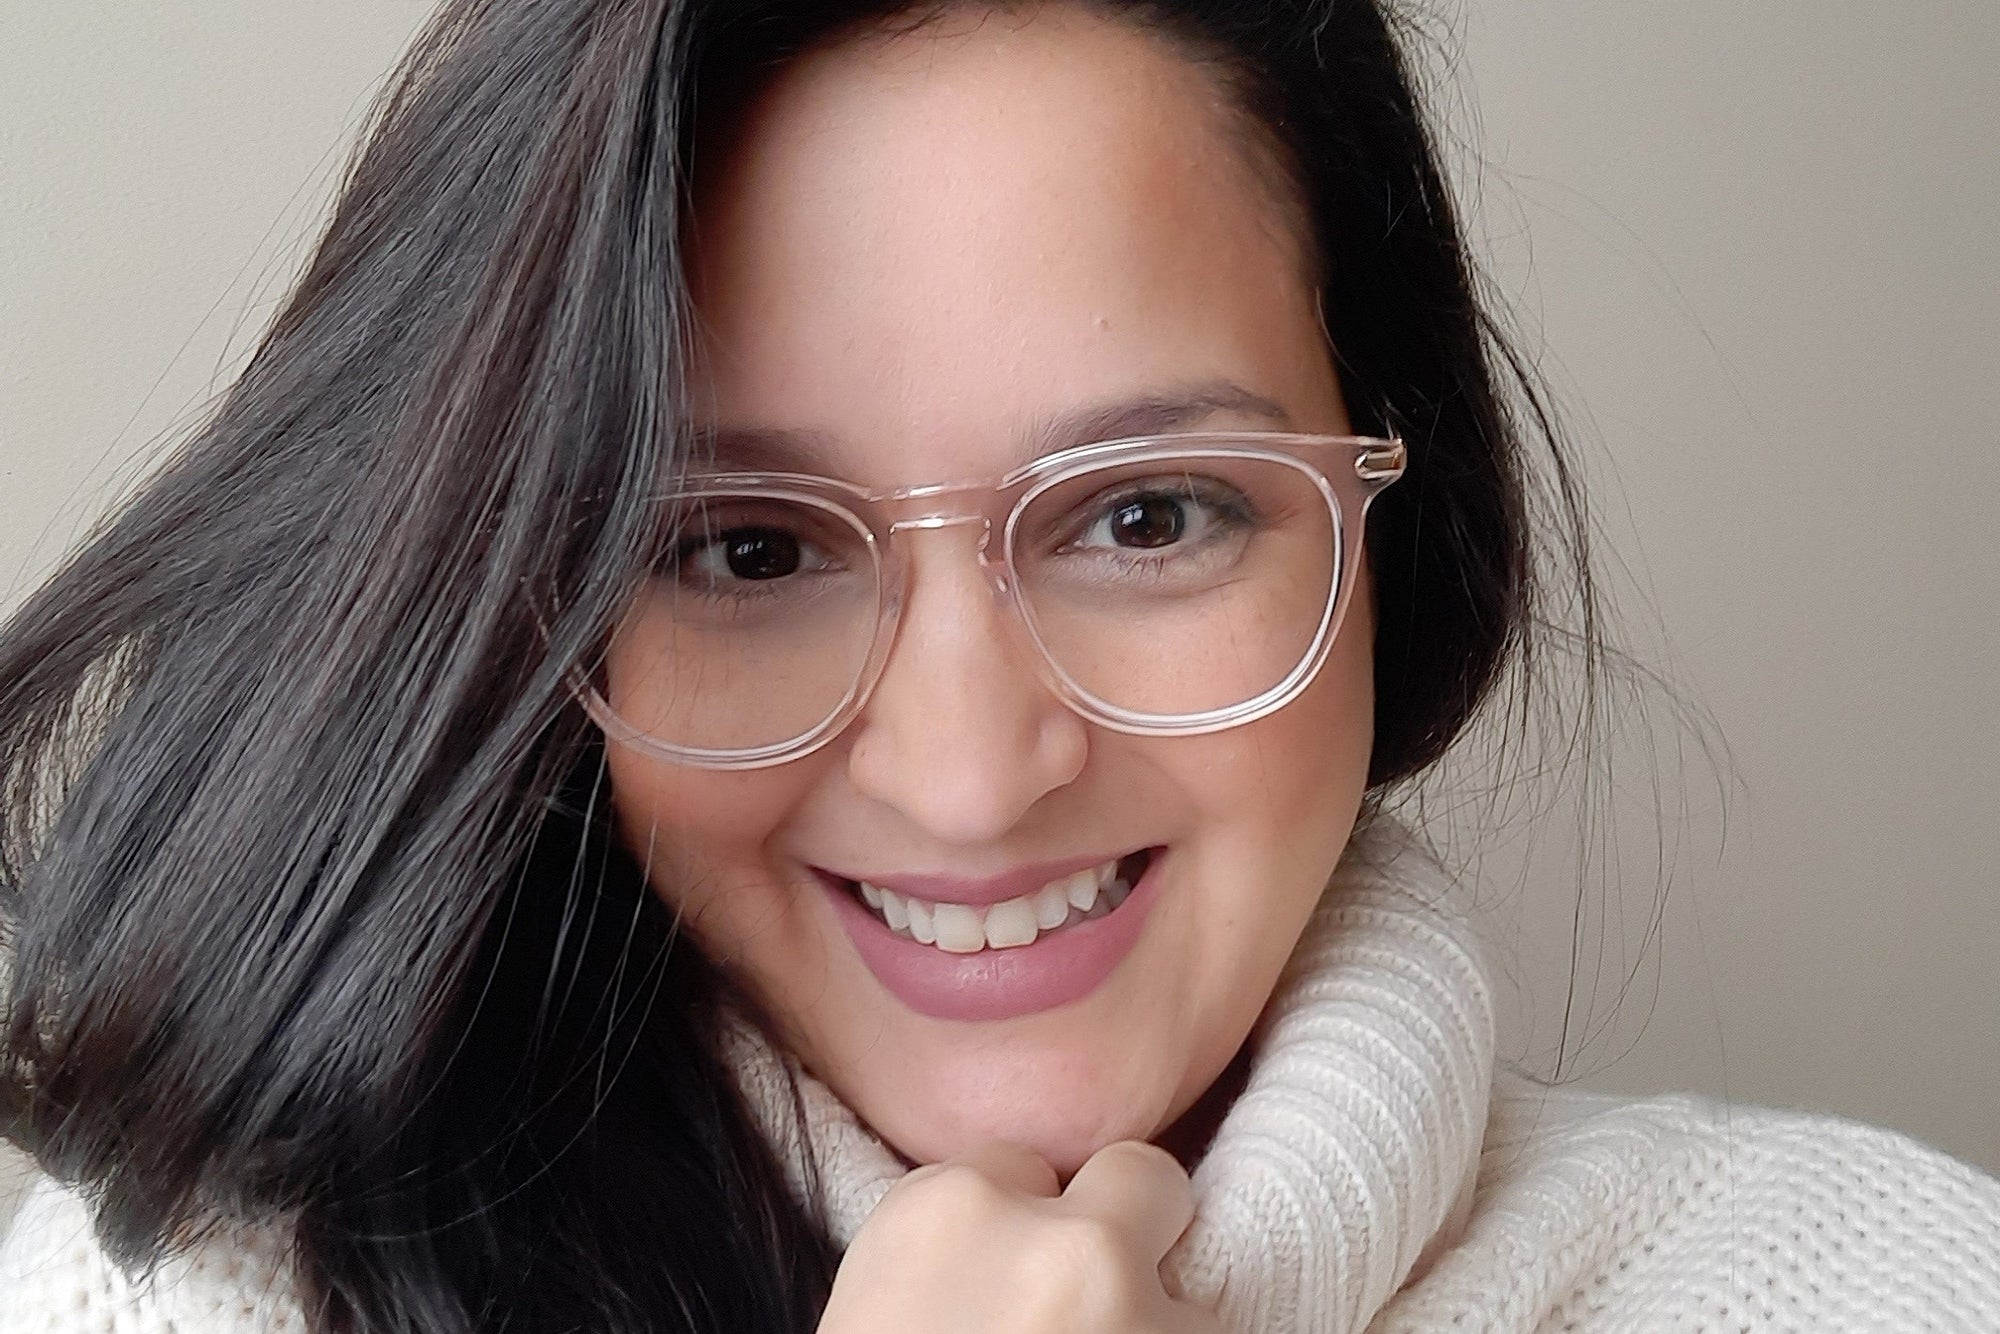 Understanding The Background Of Online Eyeglasses | KOALAEYE OPTICAL